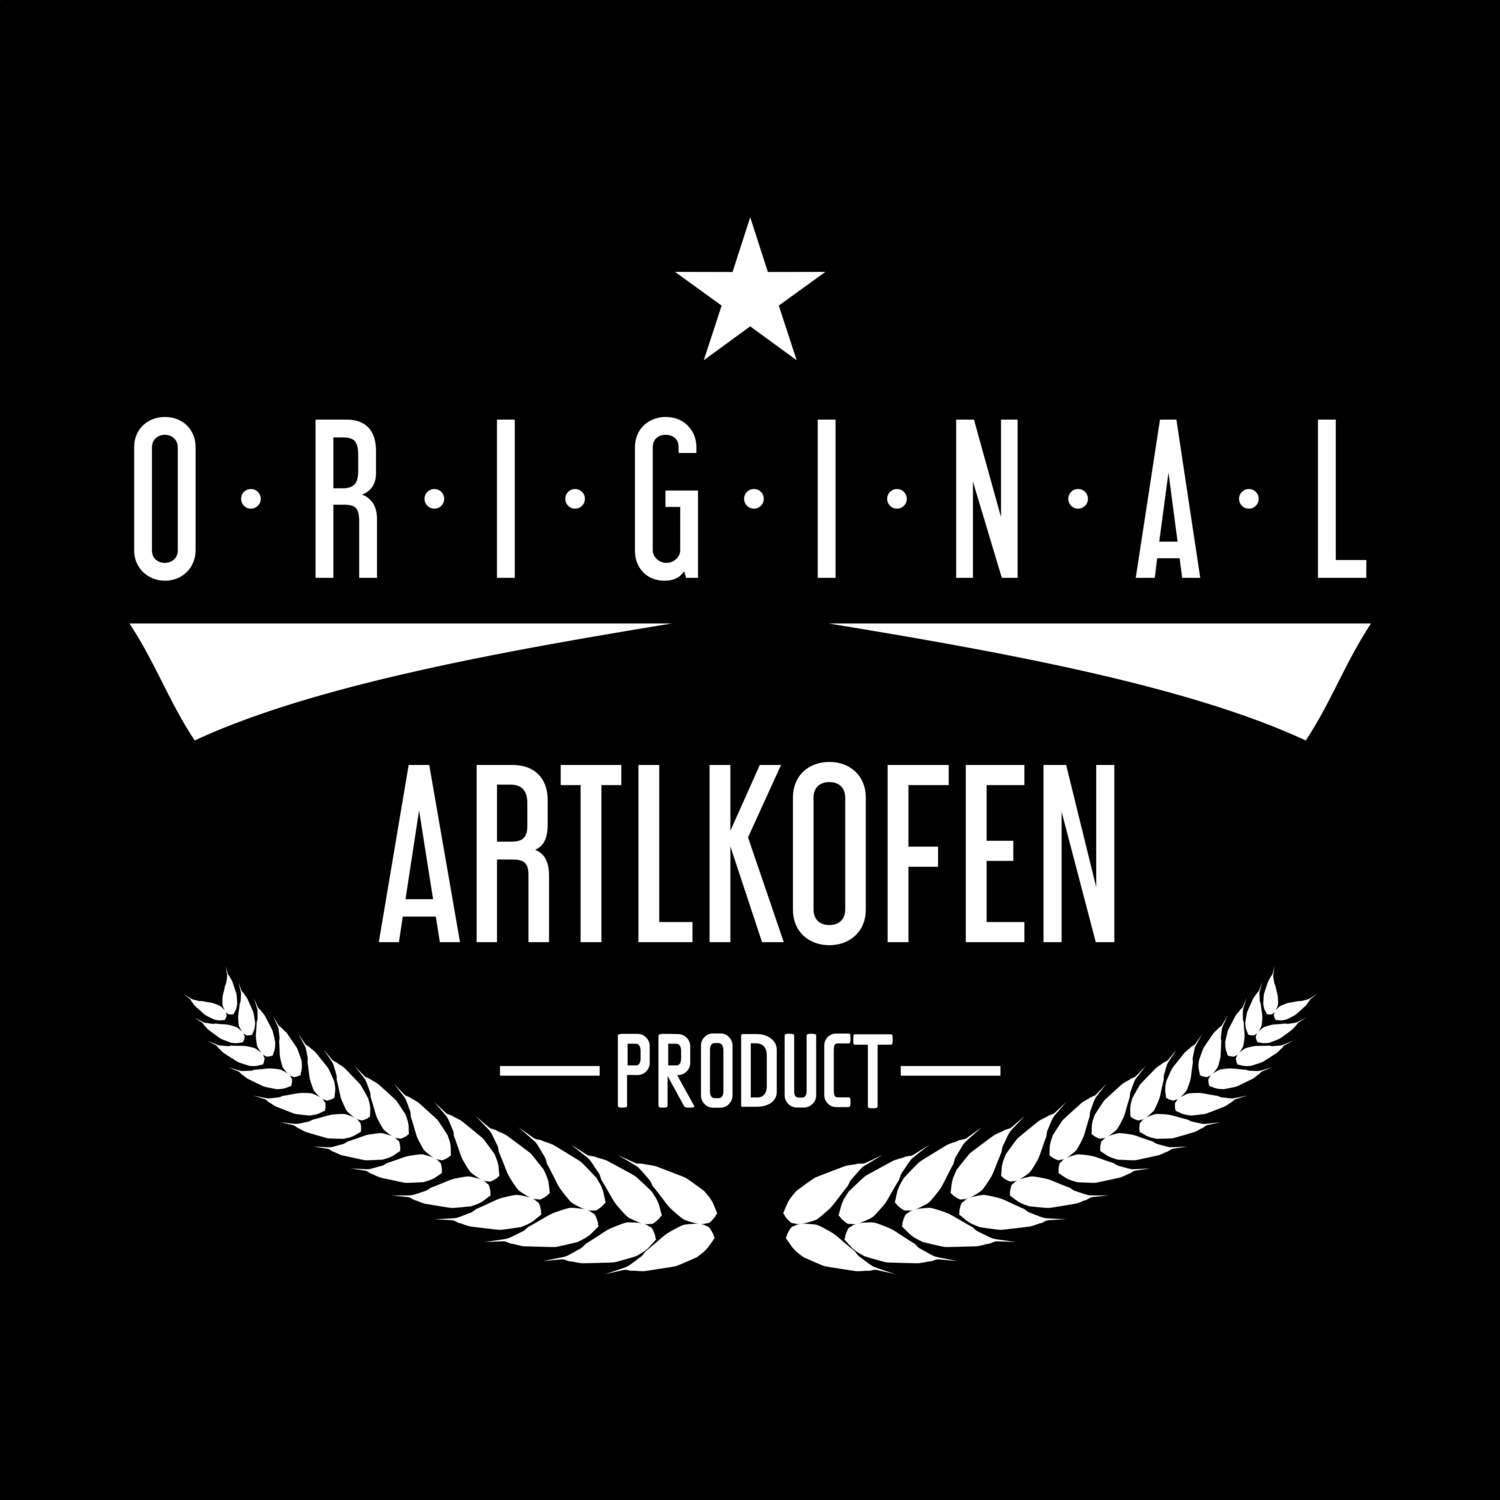 Artlkofen T-Shirt »Original Product«